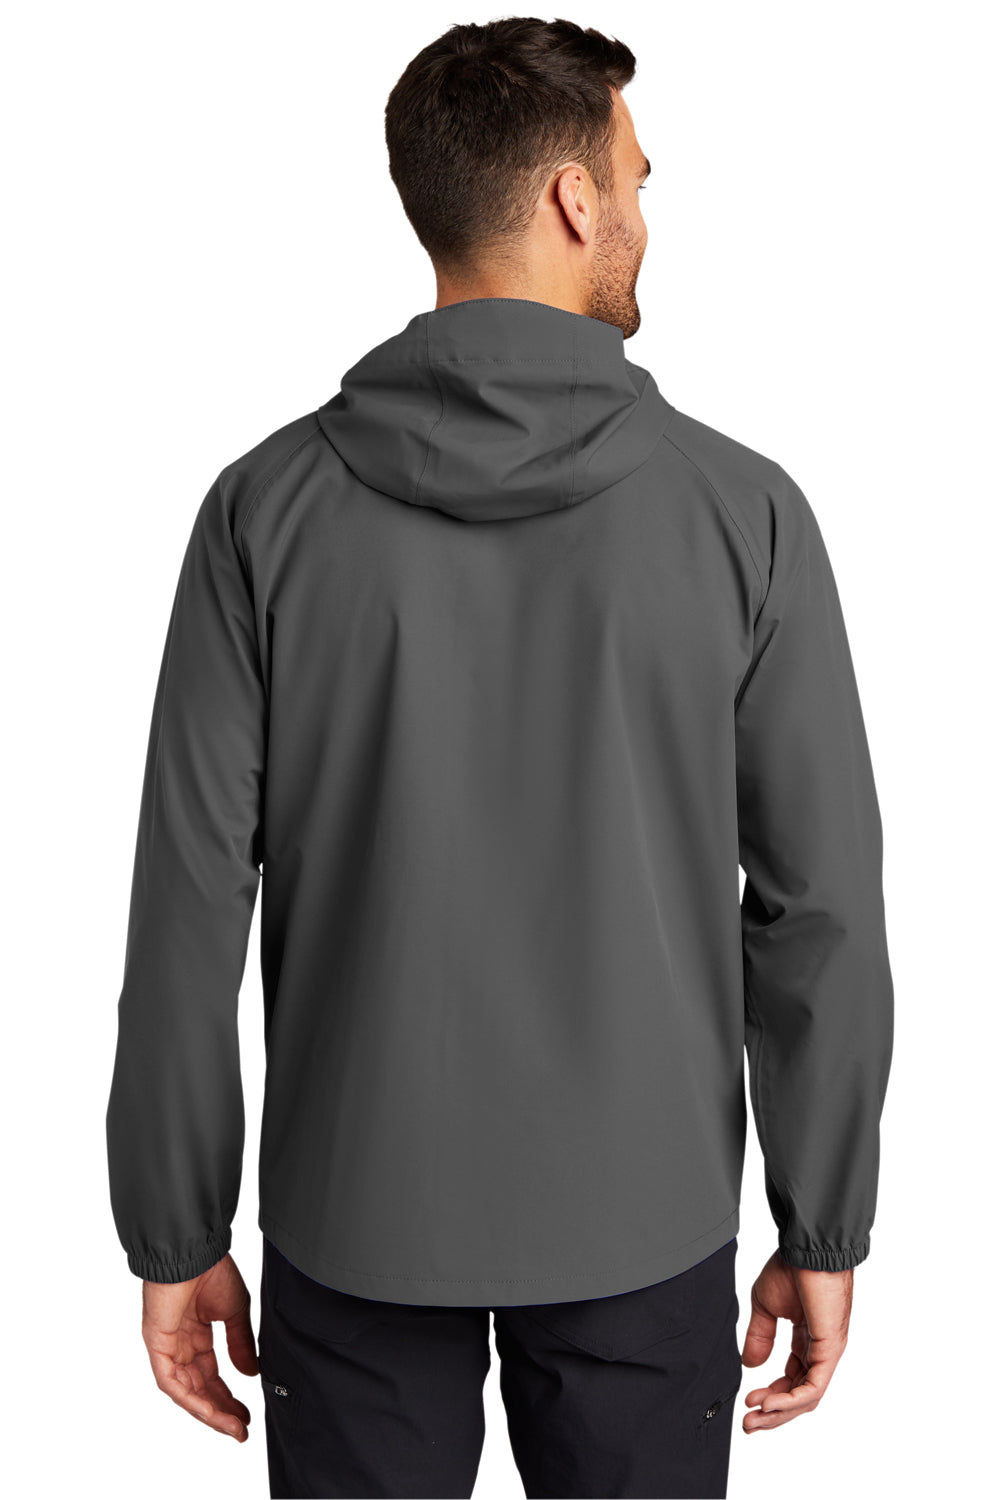 Port Authority Mens Essential Full Zip Hooded Rain Jacket Graphite Grey Side